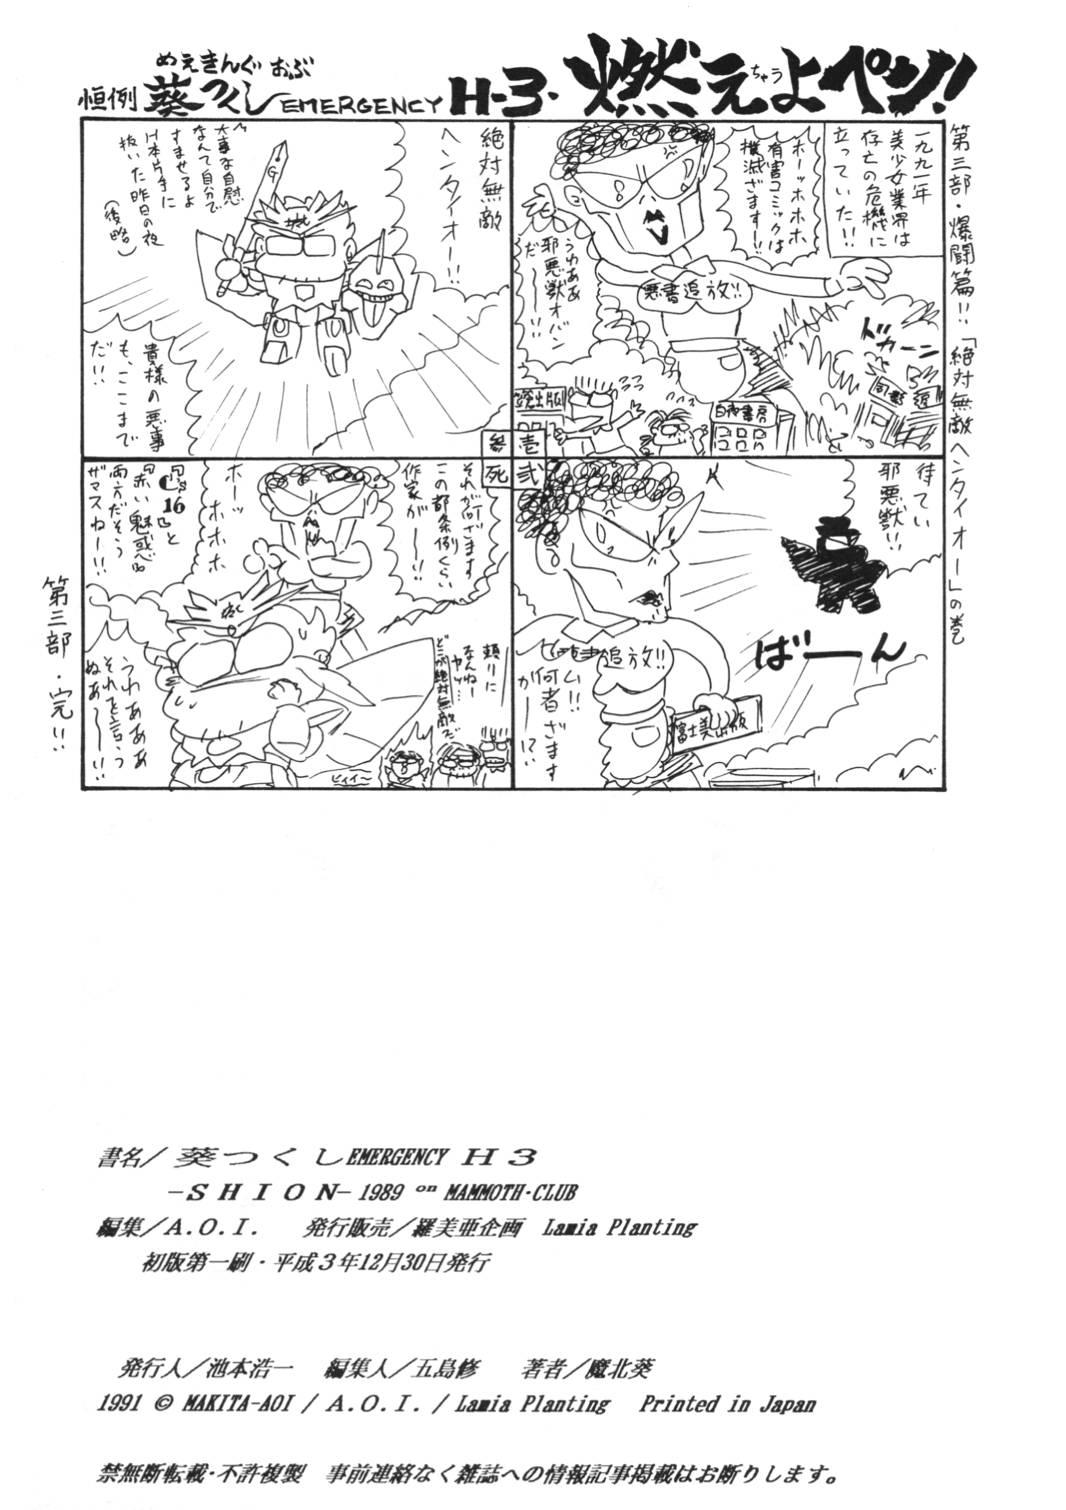 AOI Tsukushi Emergency H3 SHION 1989 29